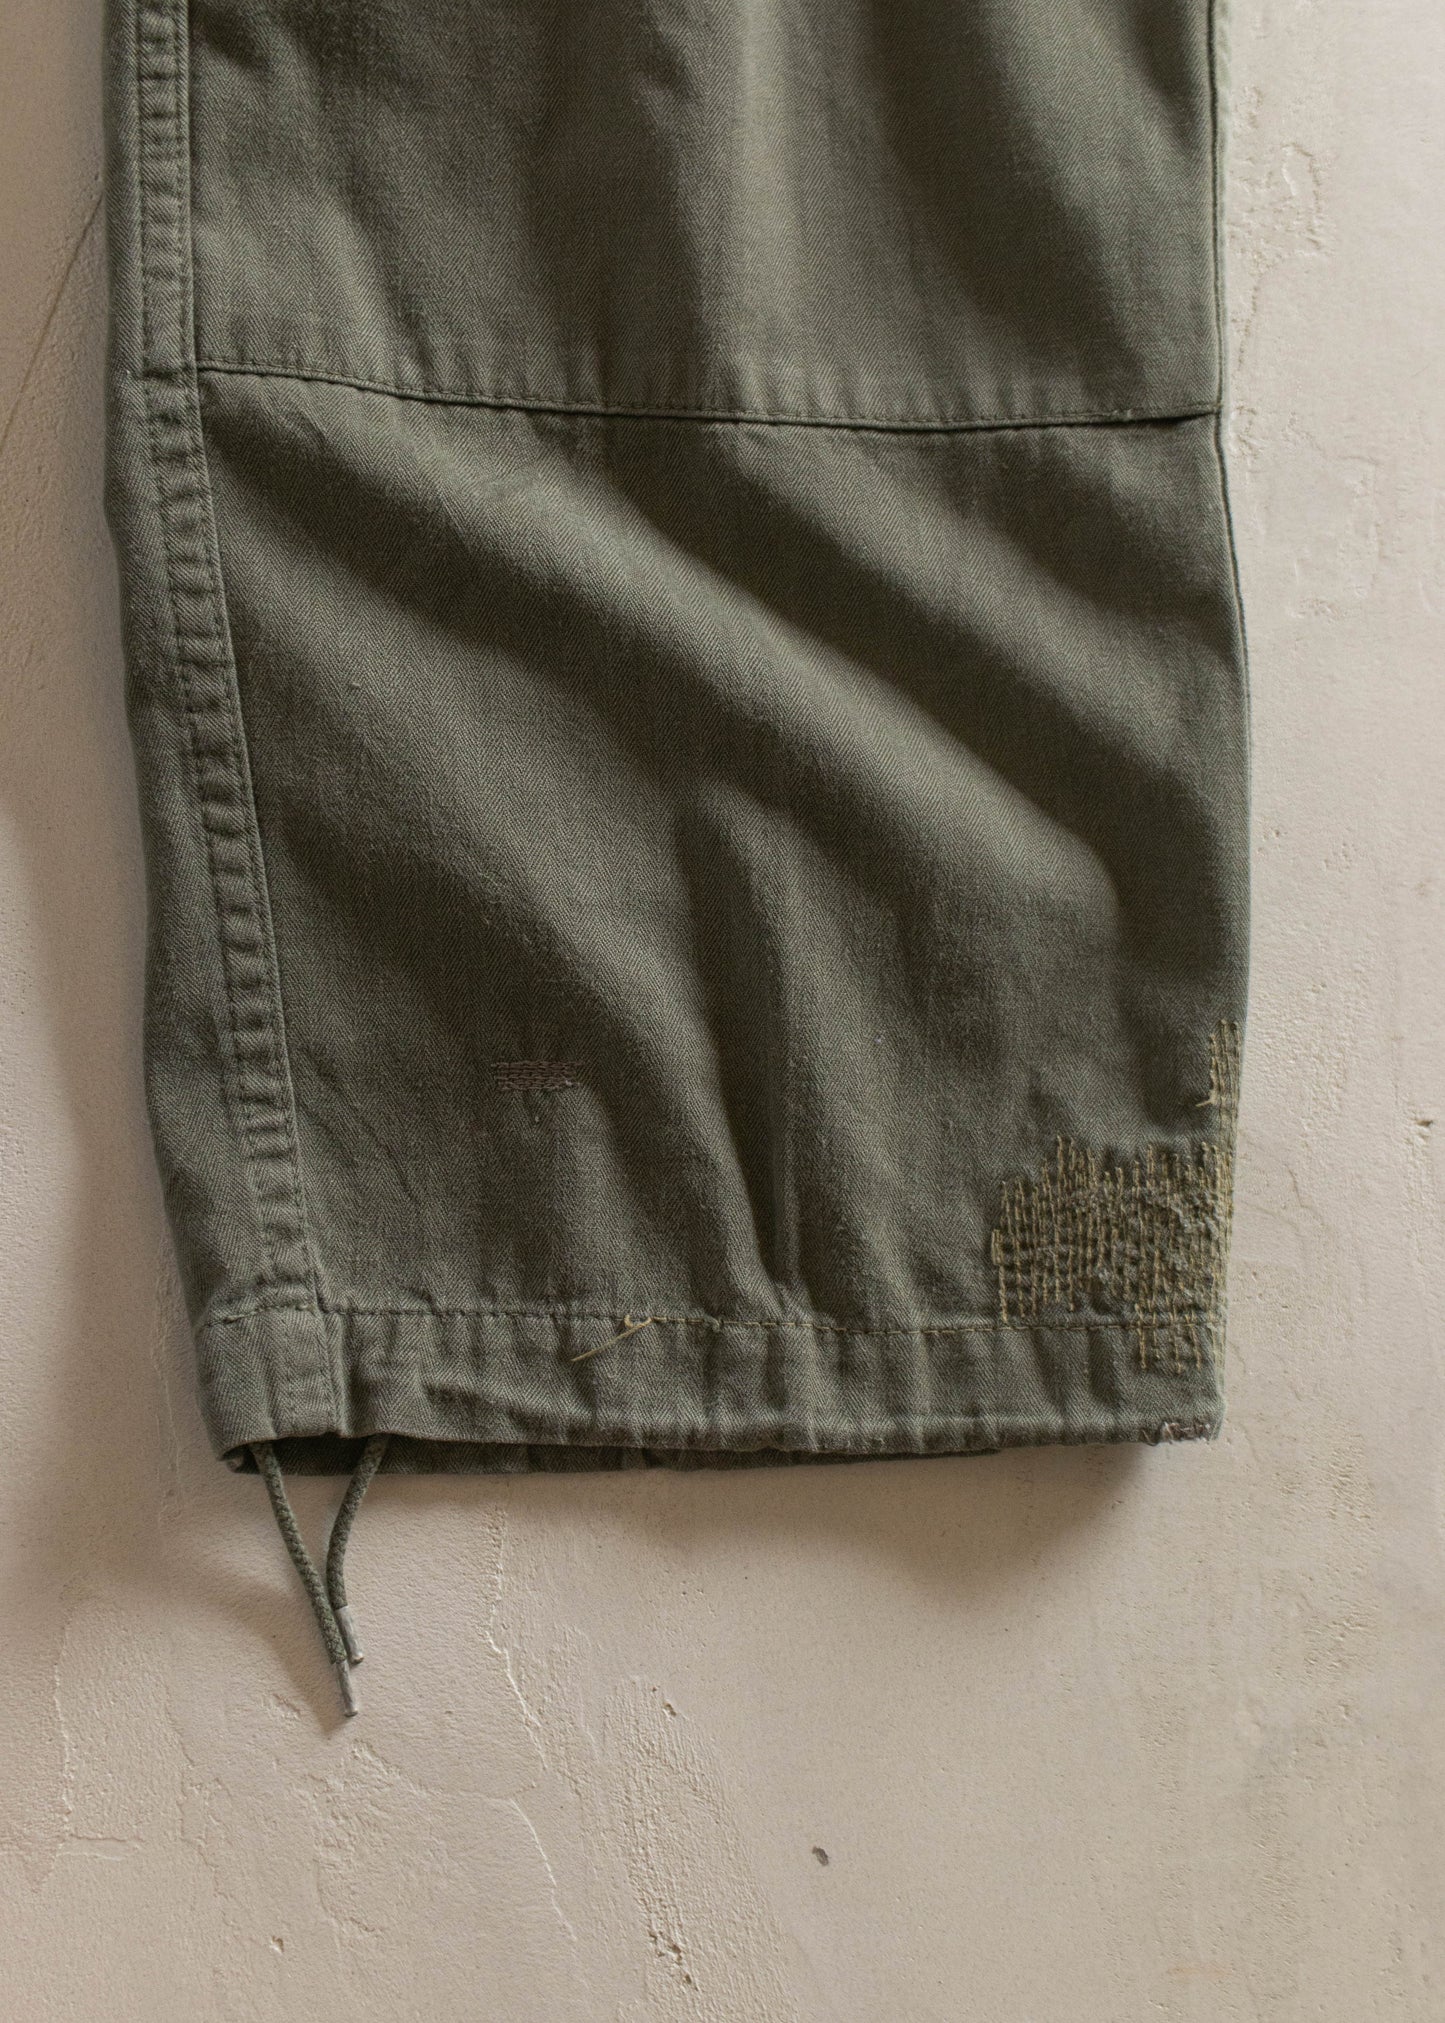 1970s HBT French Military Cargo Pants Size Women's 25 Men's 28